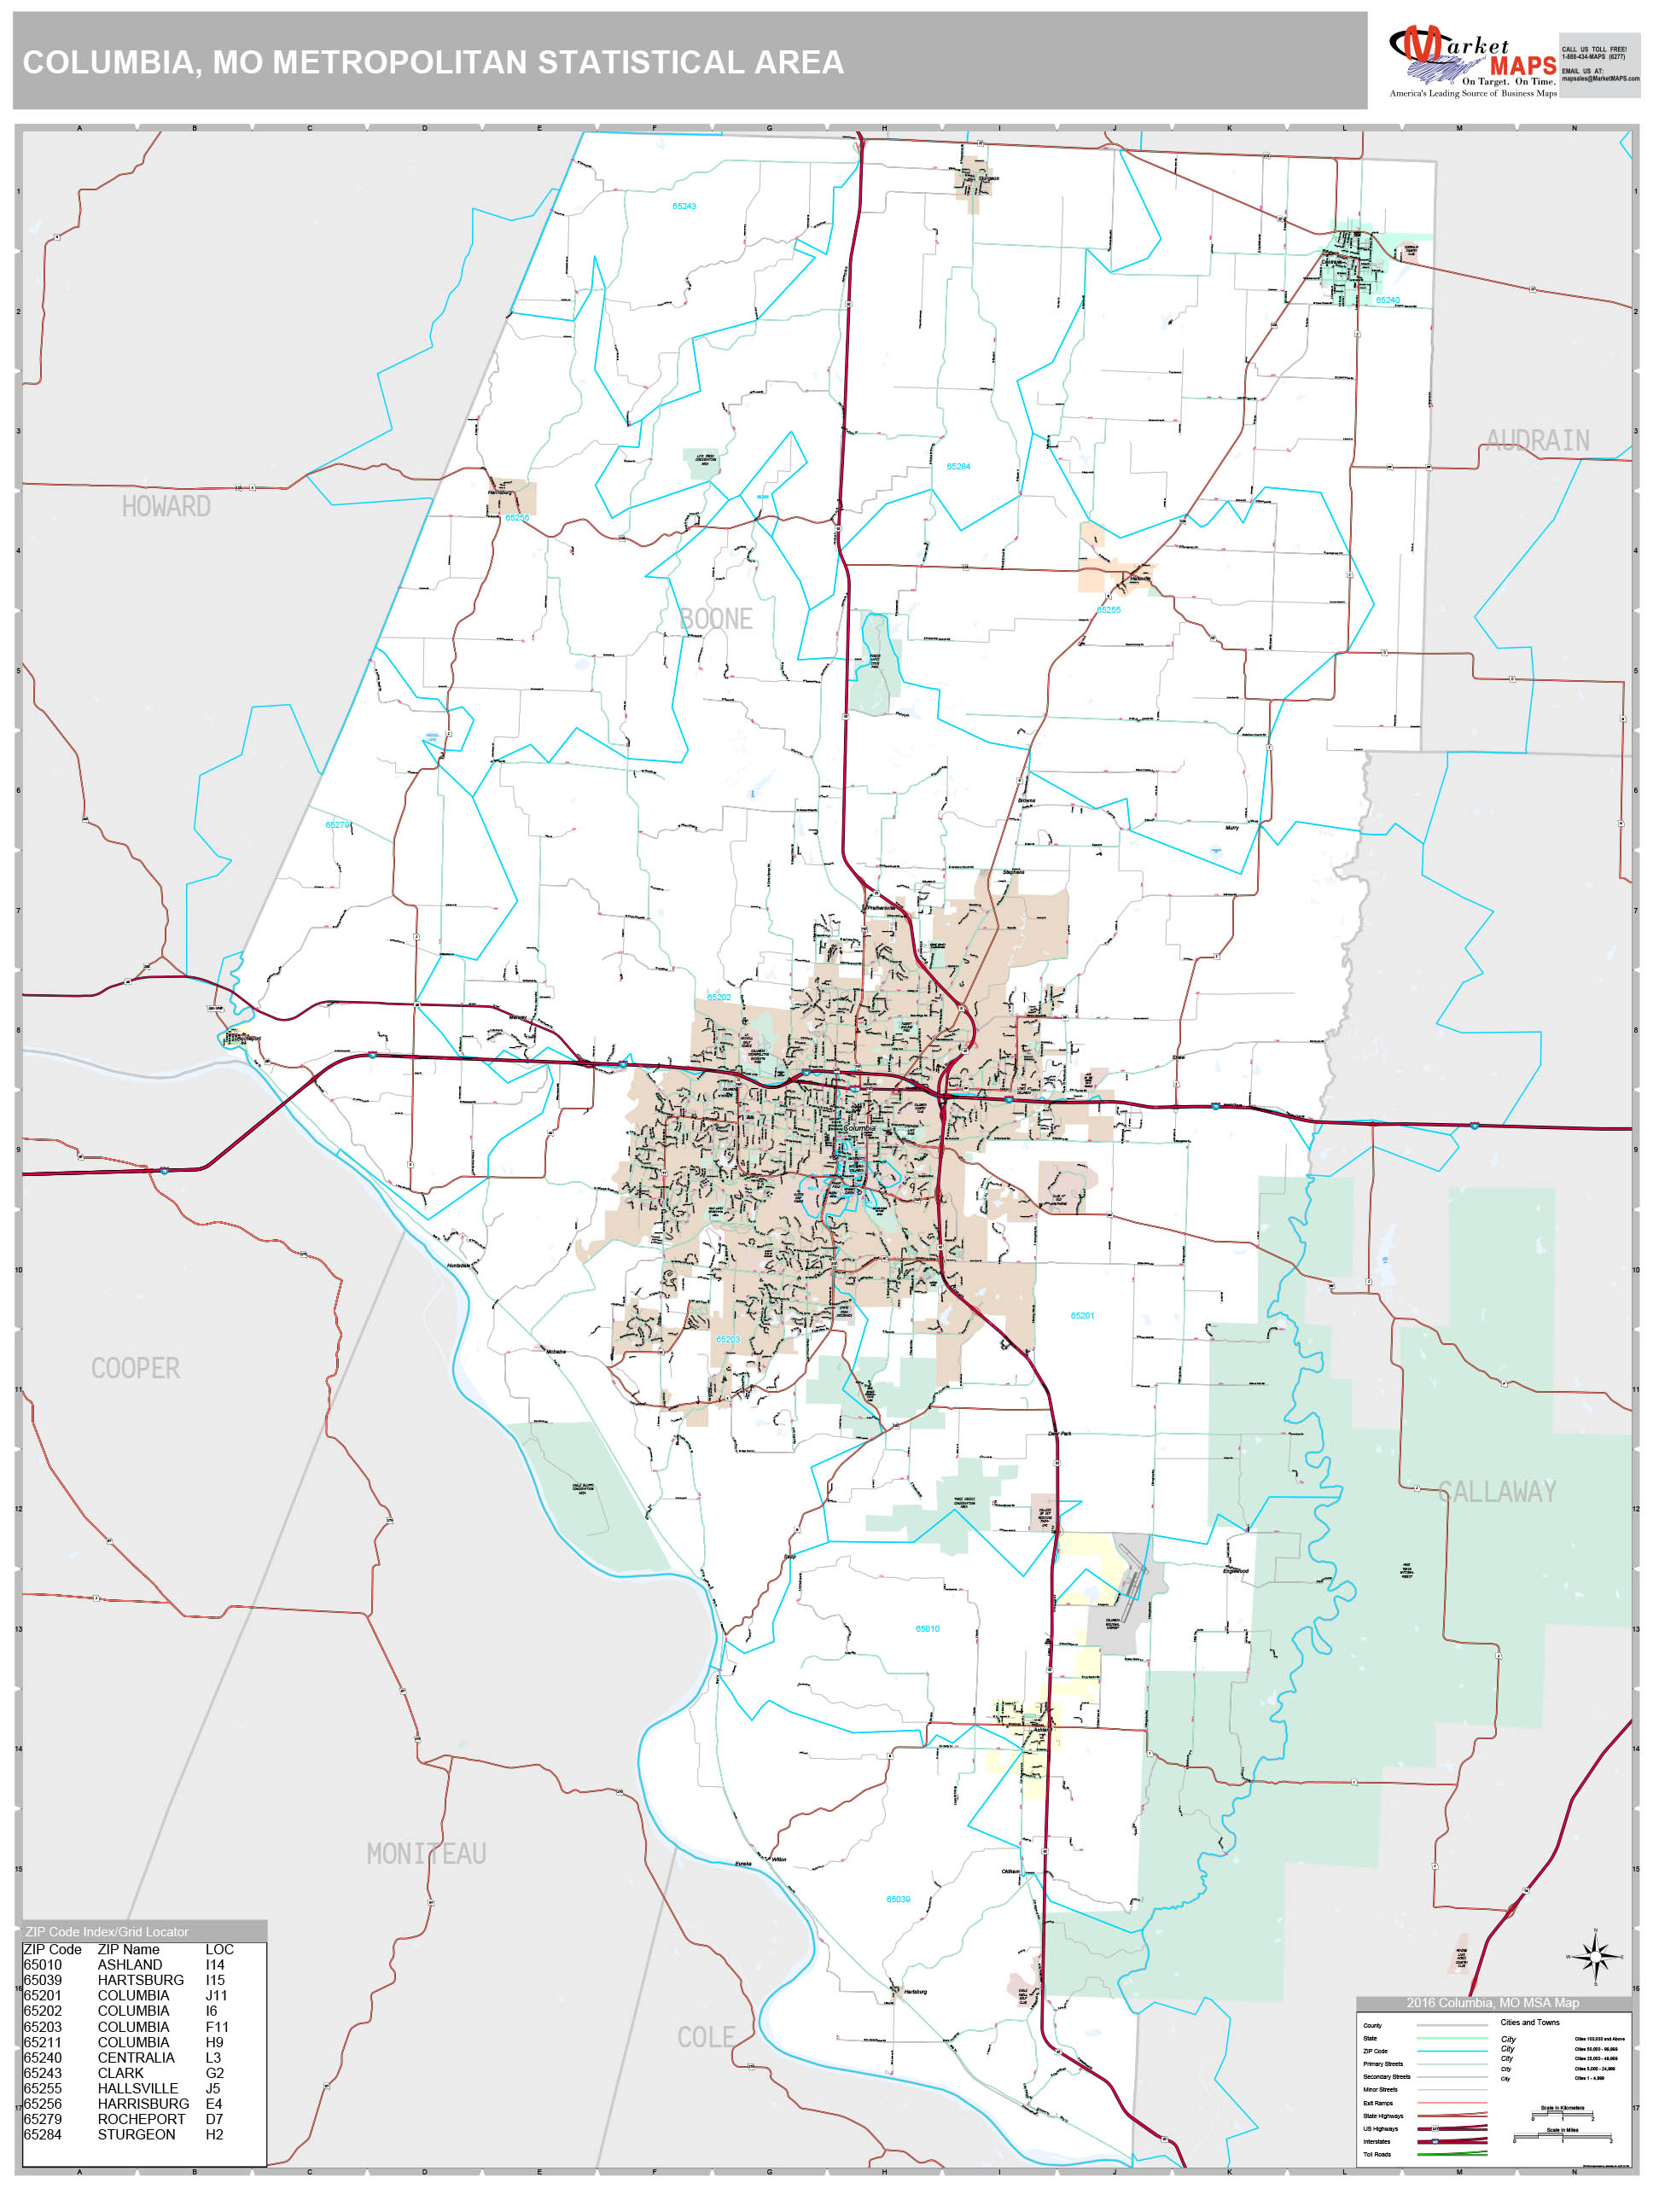 Columbia, MO Metro Area Wall Map Premium Style by MarketMAPS - MapSales